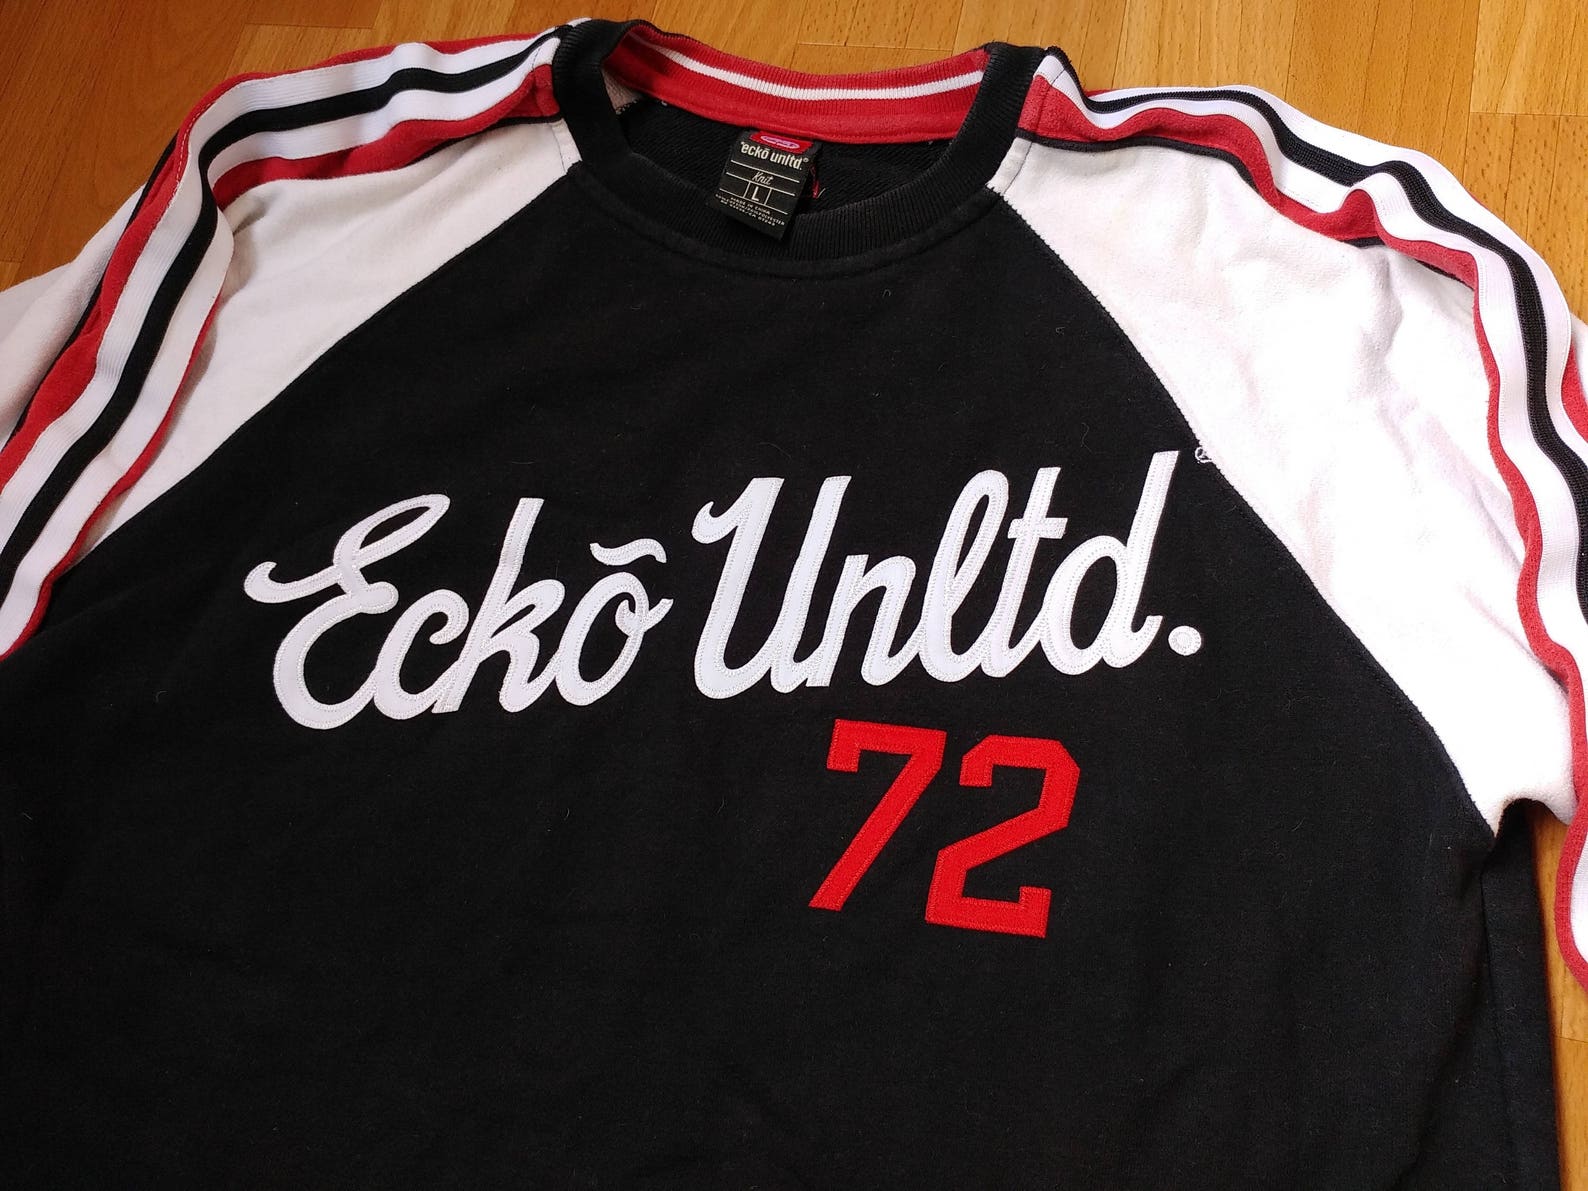 ECKO UNLTD Jersey Vintage Black Shirt 90s Hip-hop Clothing | Etsy